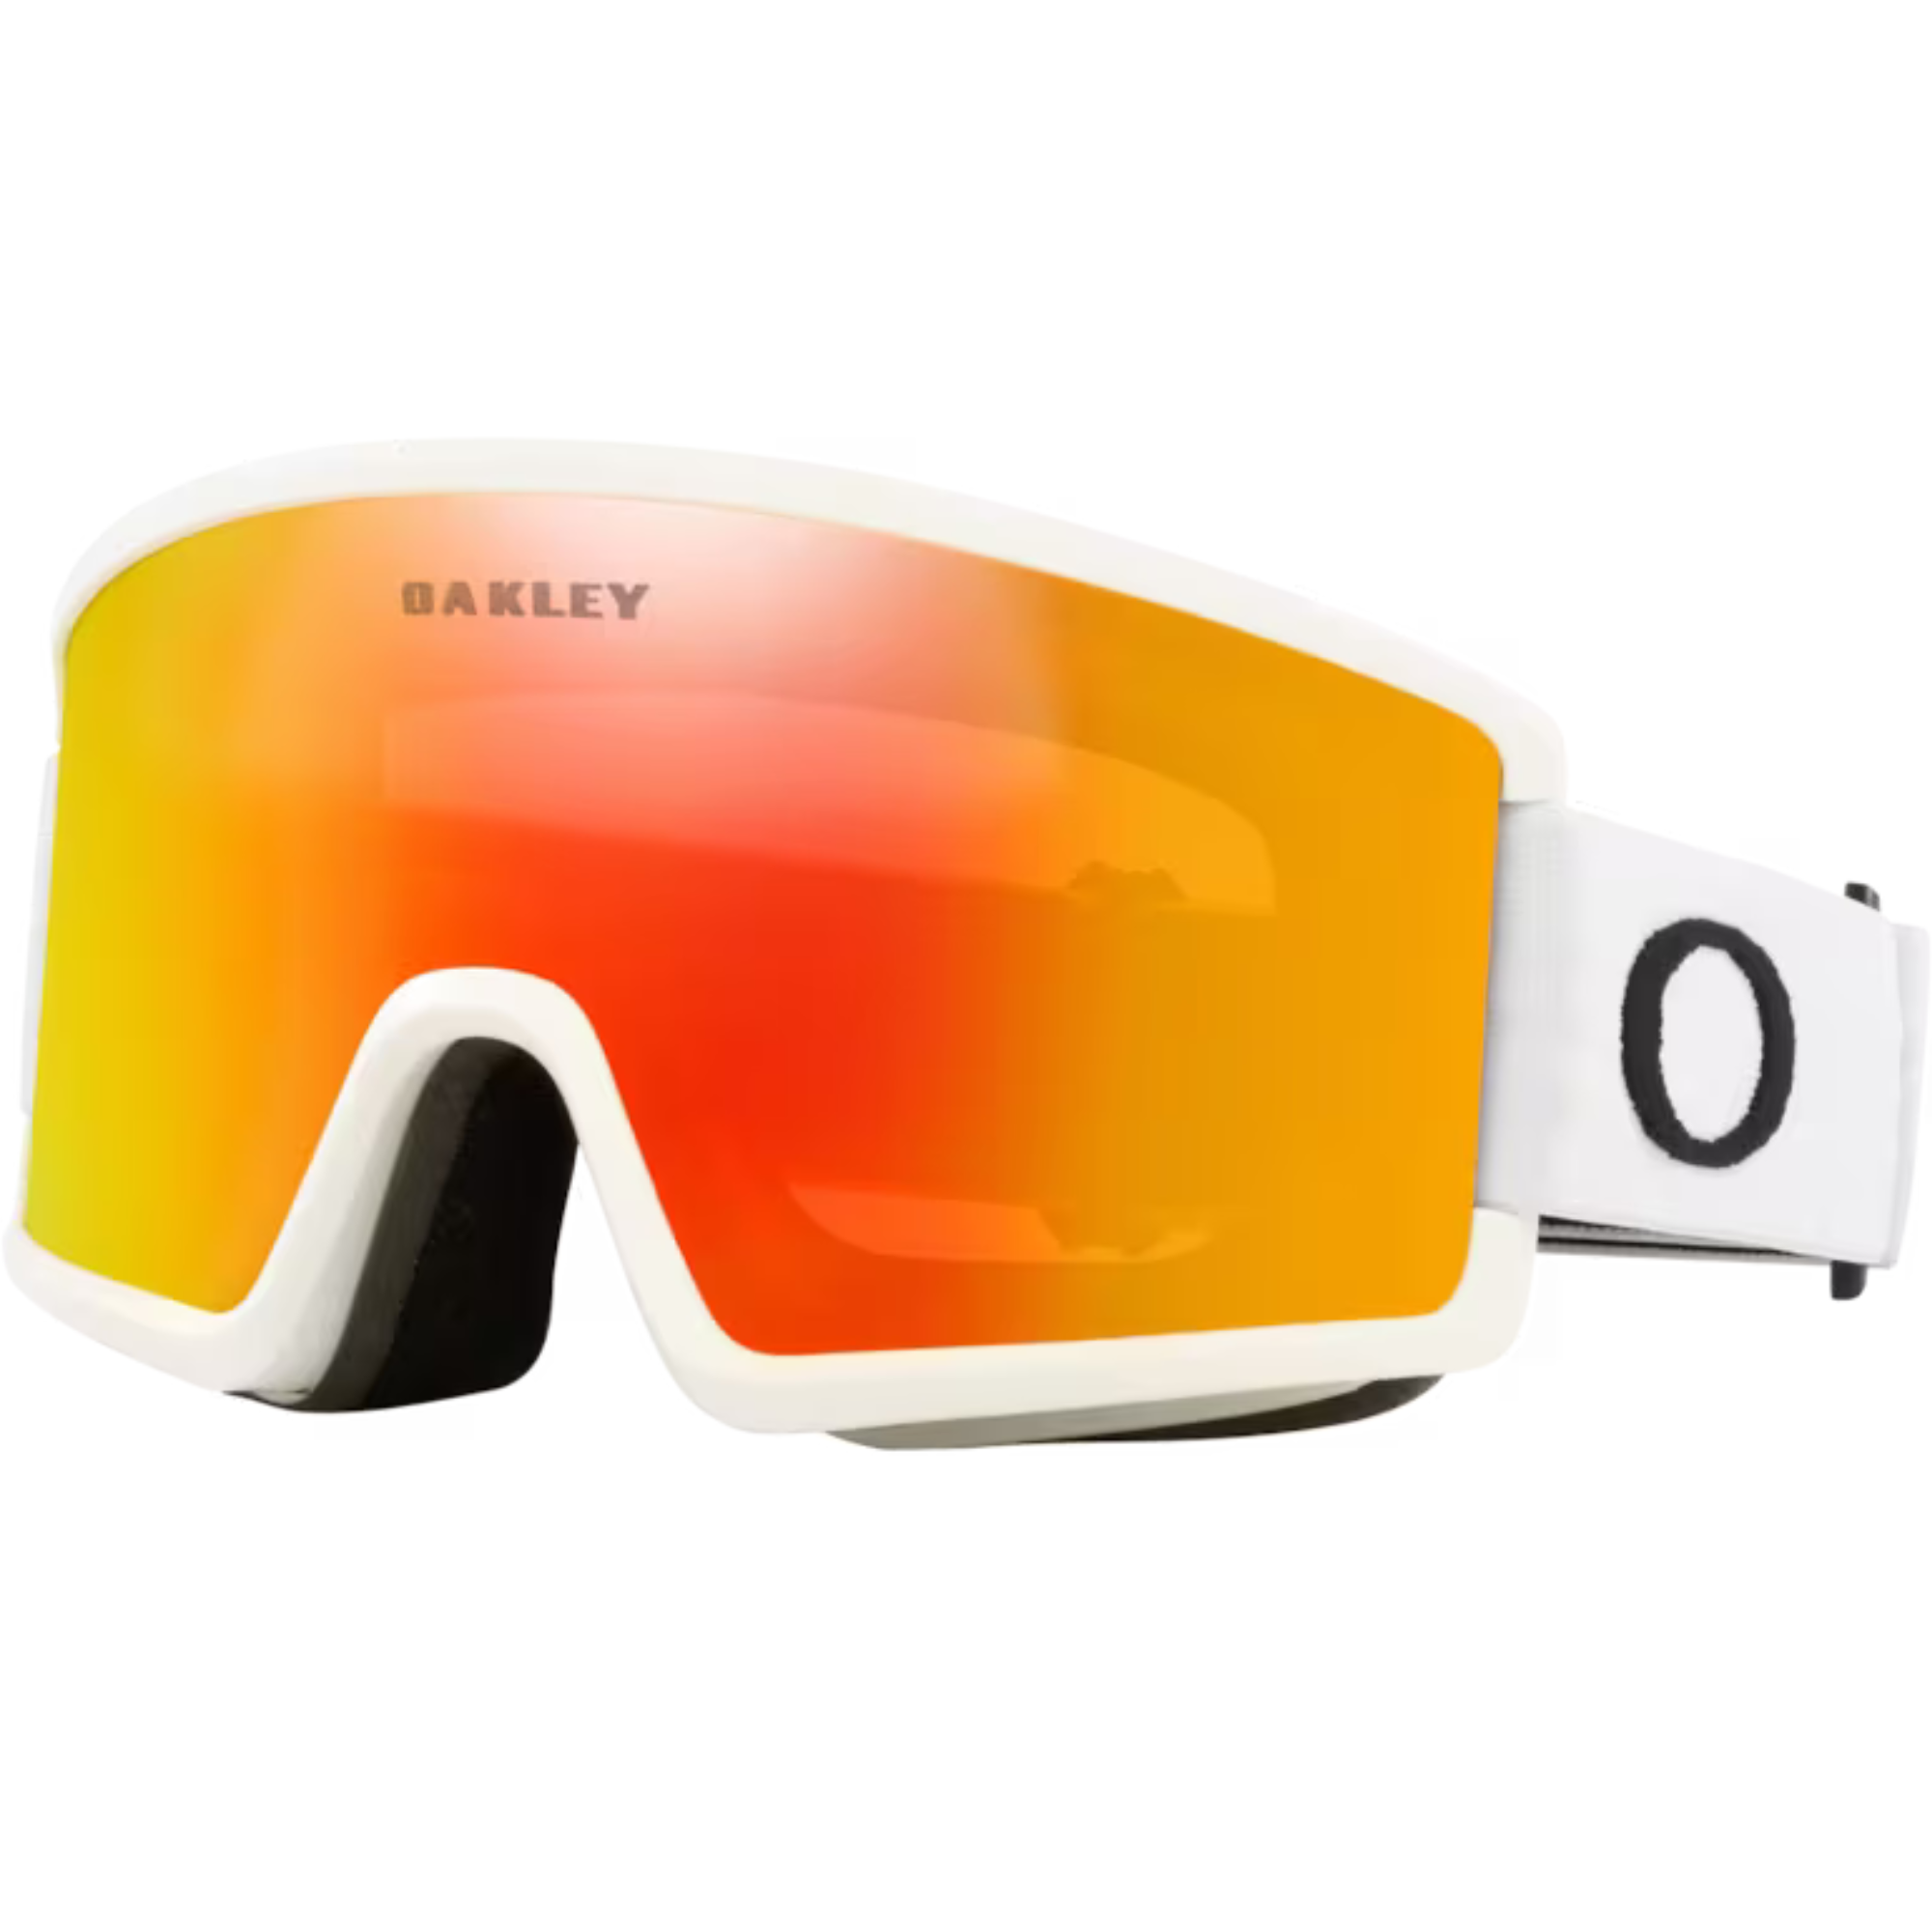 Oakley Target Line M Goggles - Matte White / Fire